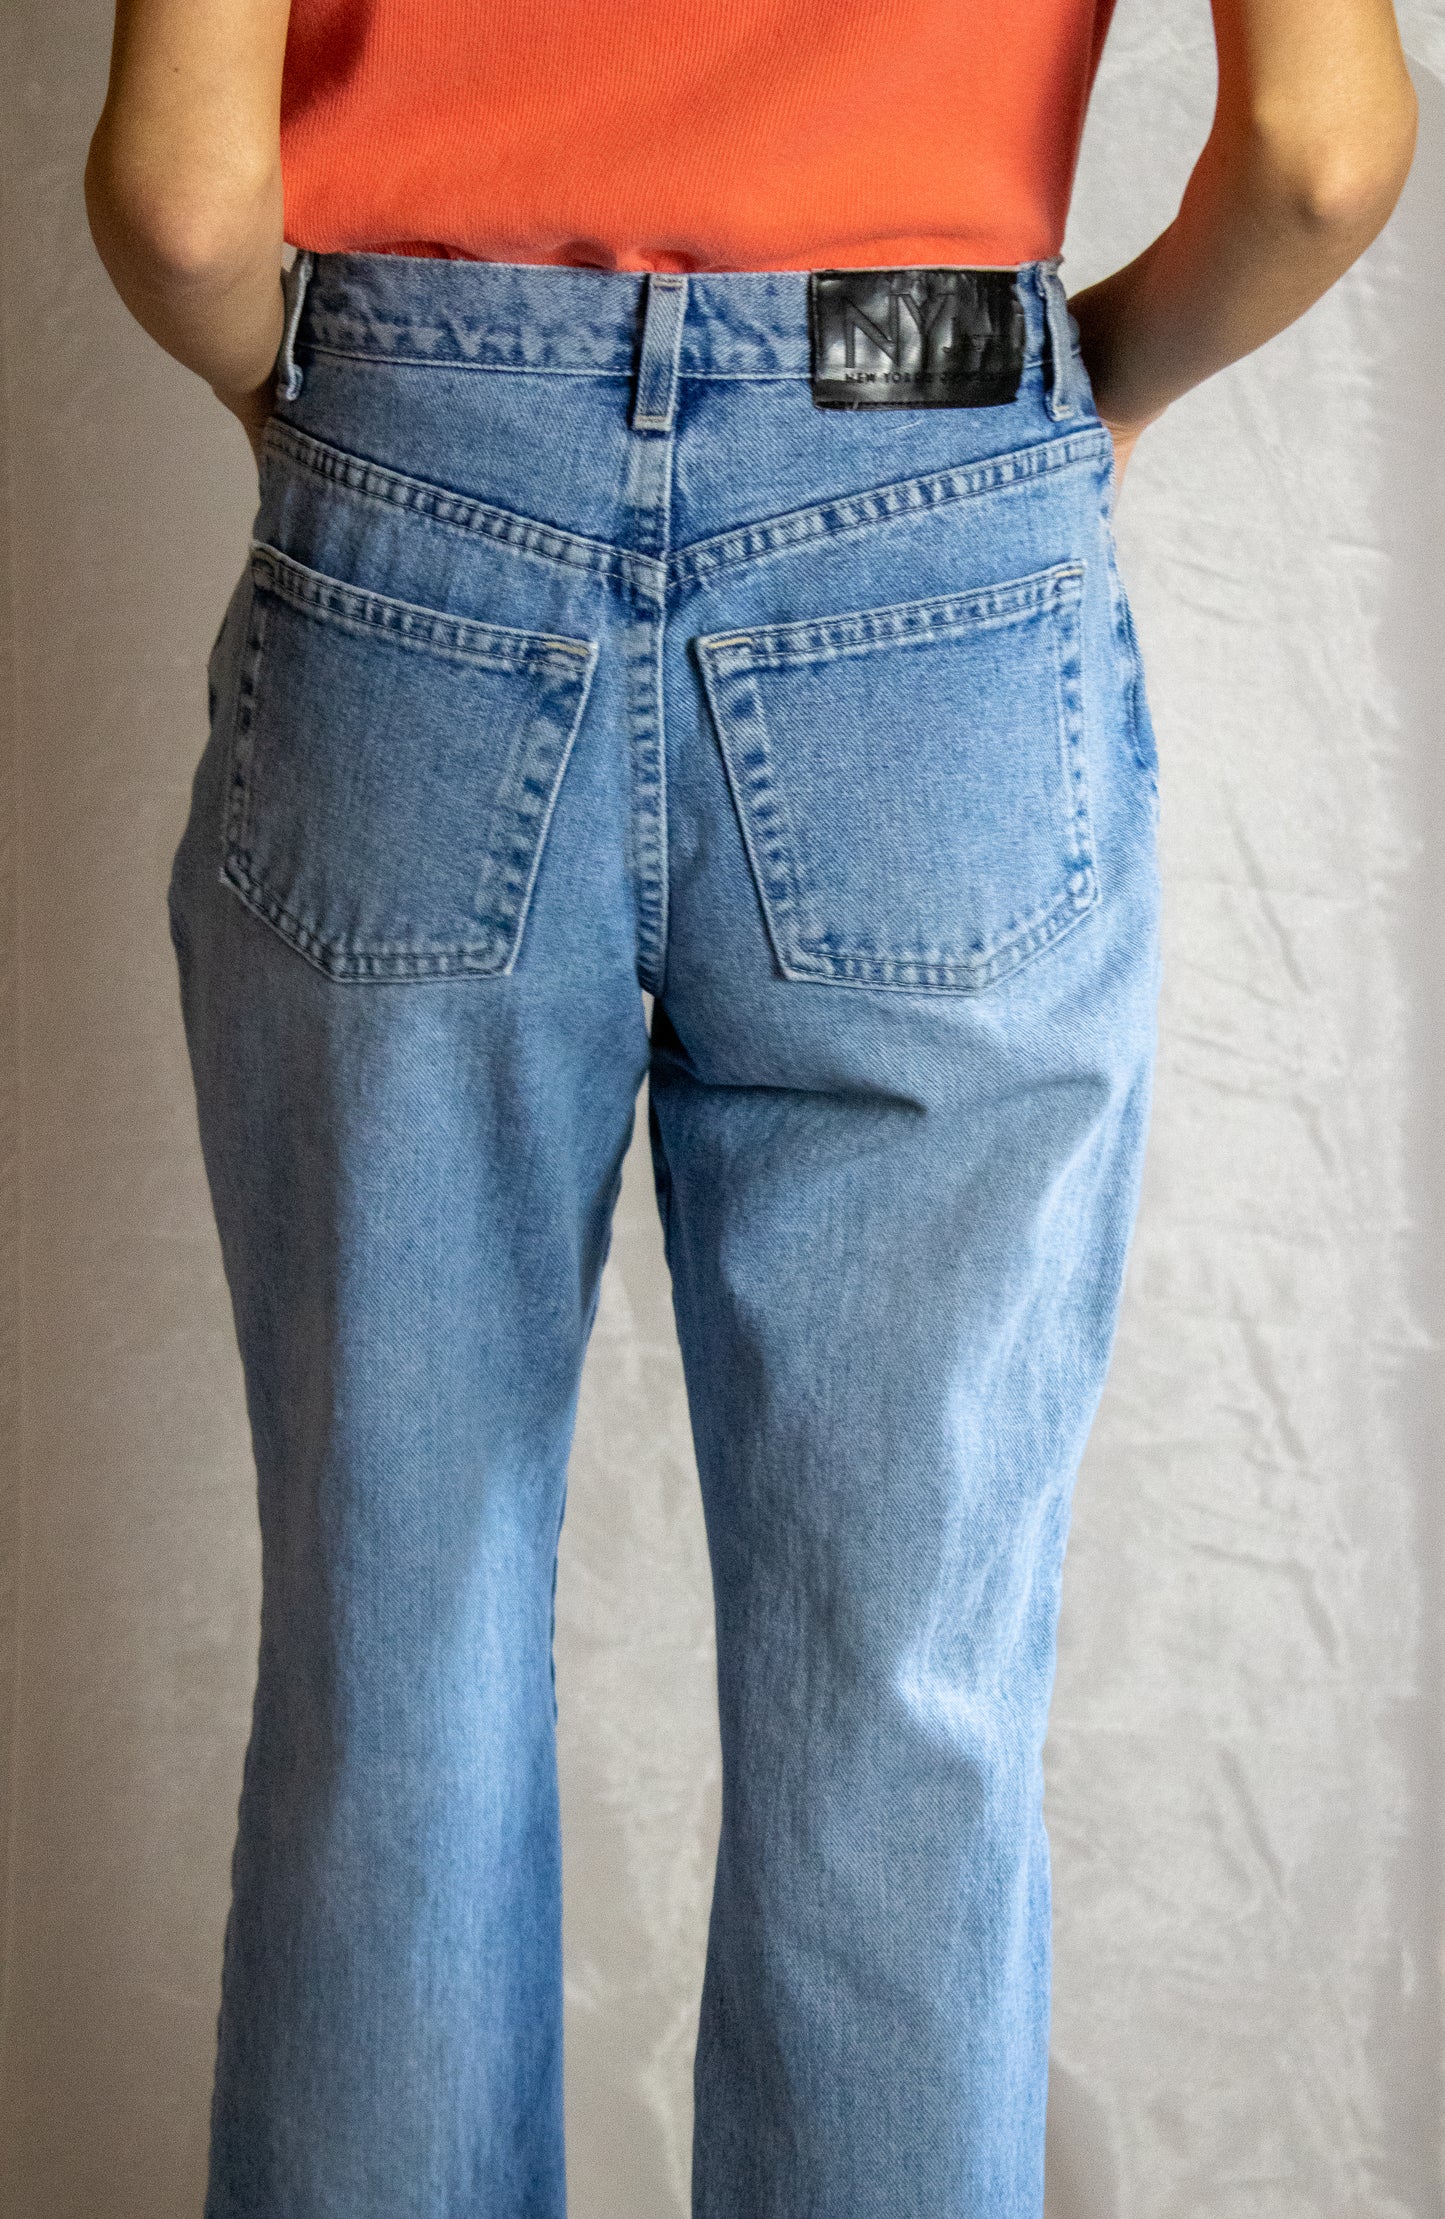 Light Wash Denim Jeans - 26x30